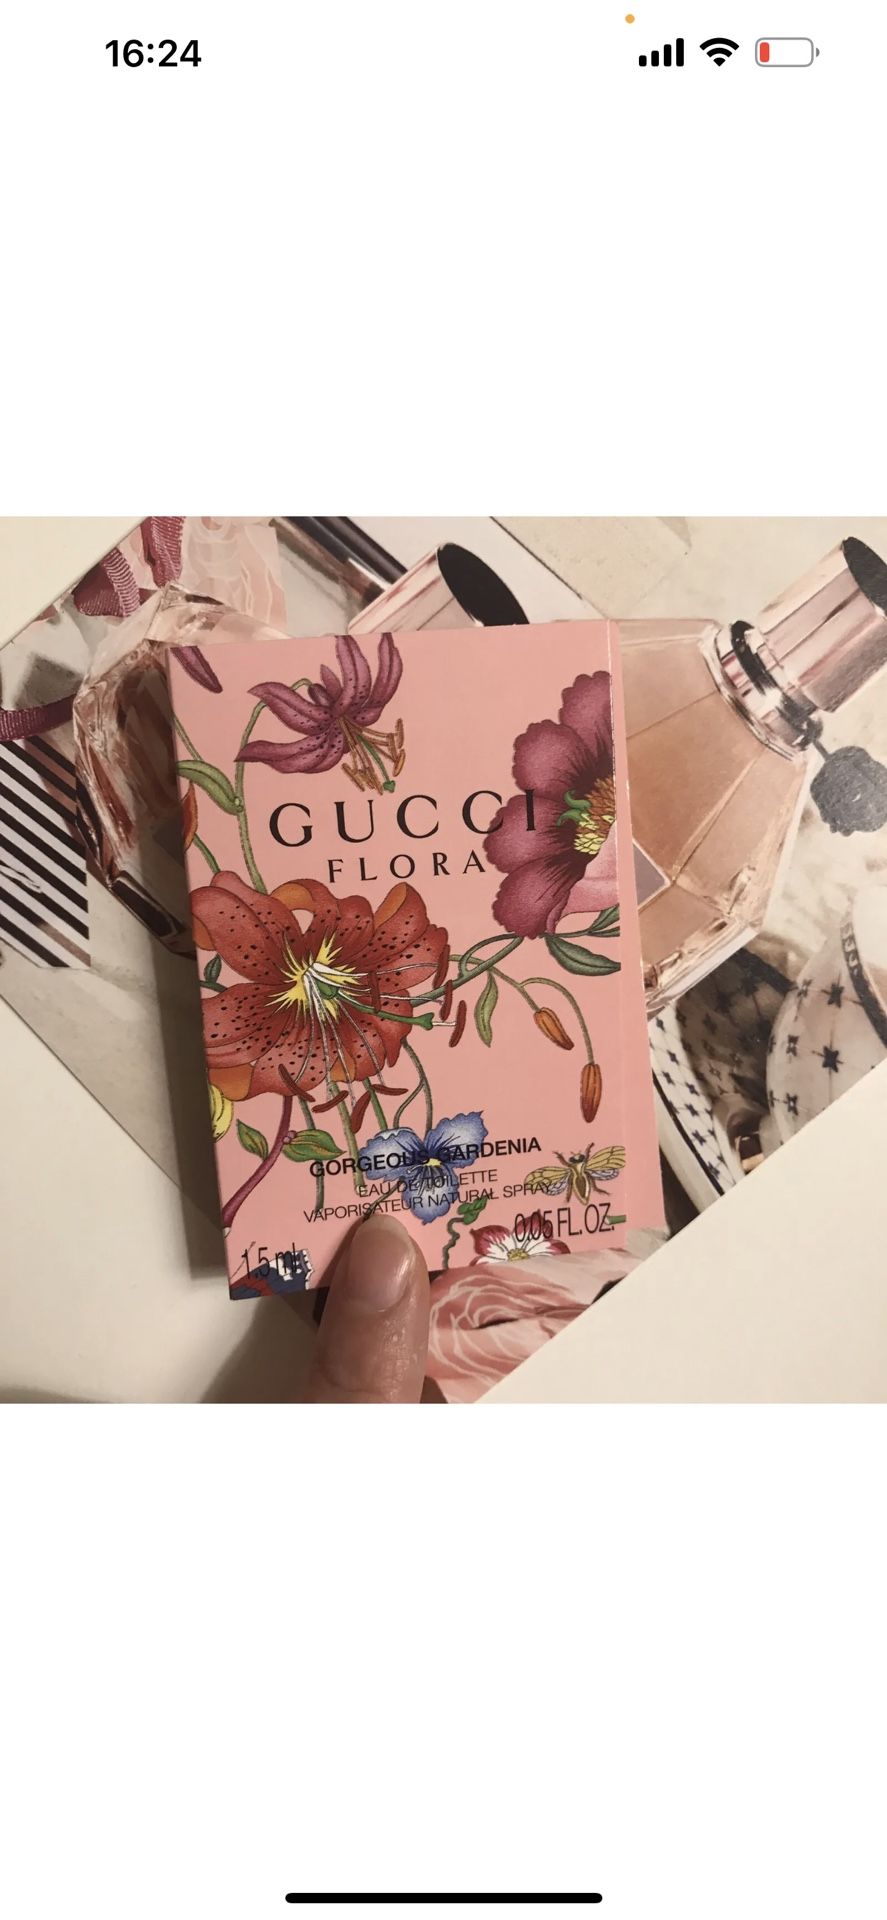 Gucci Flora Gorgeous Gardenia Eau de Toilette EDT Perfume Sample .05 oz